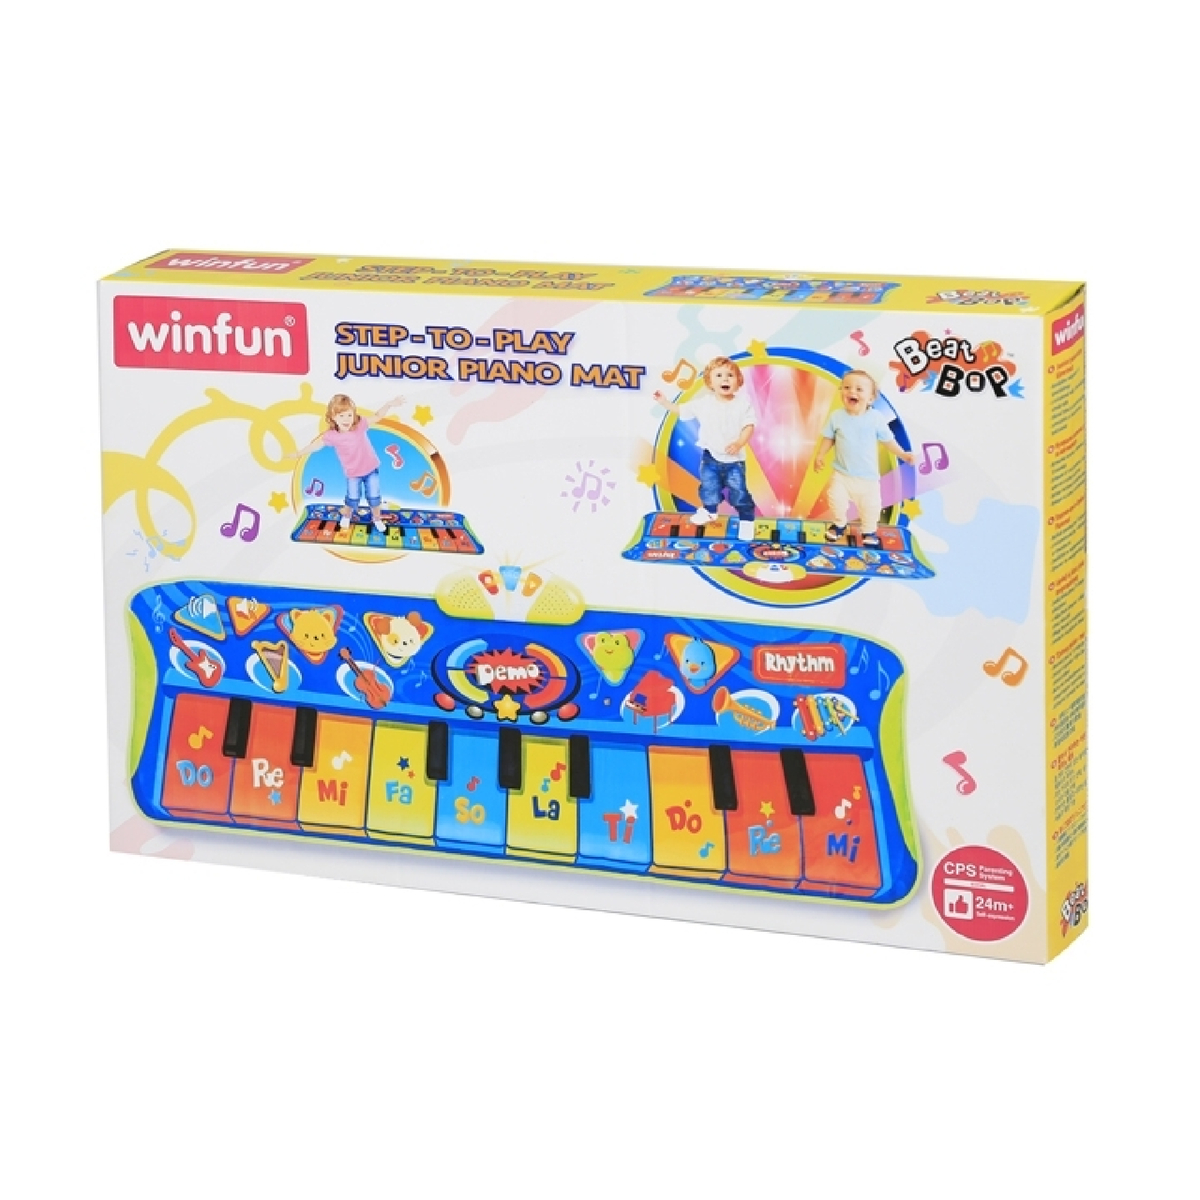 Winfun Step-To-Play Junior Piano Mat, 002507